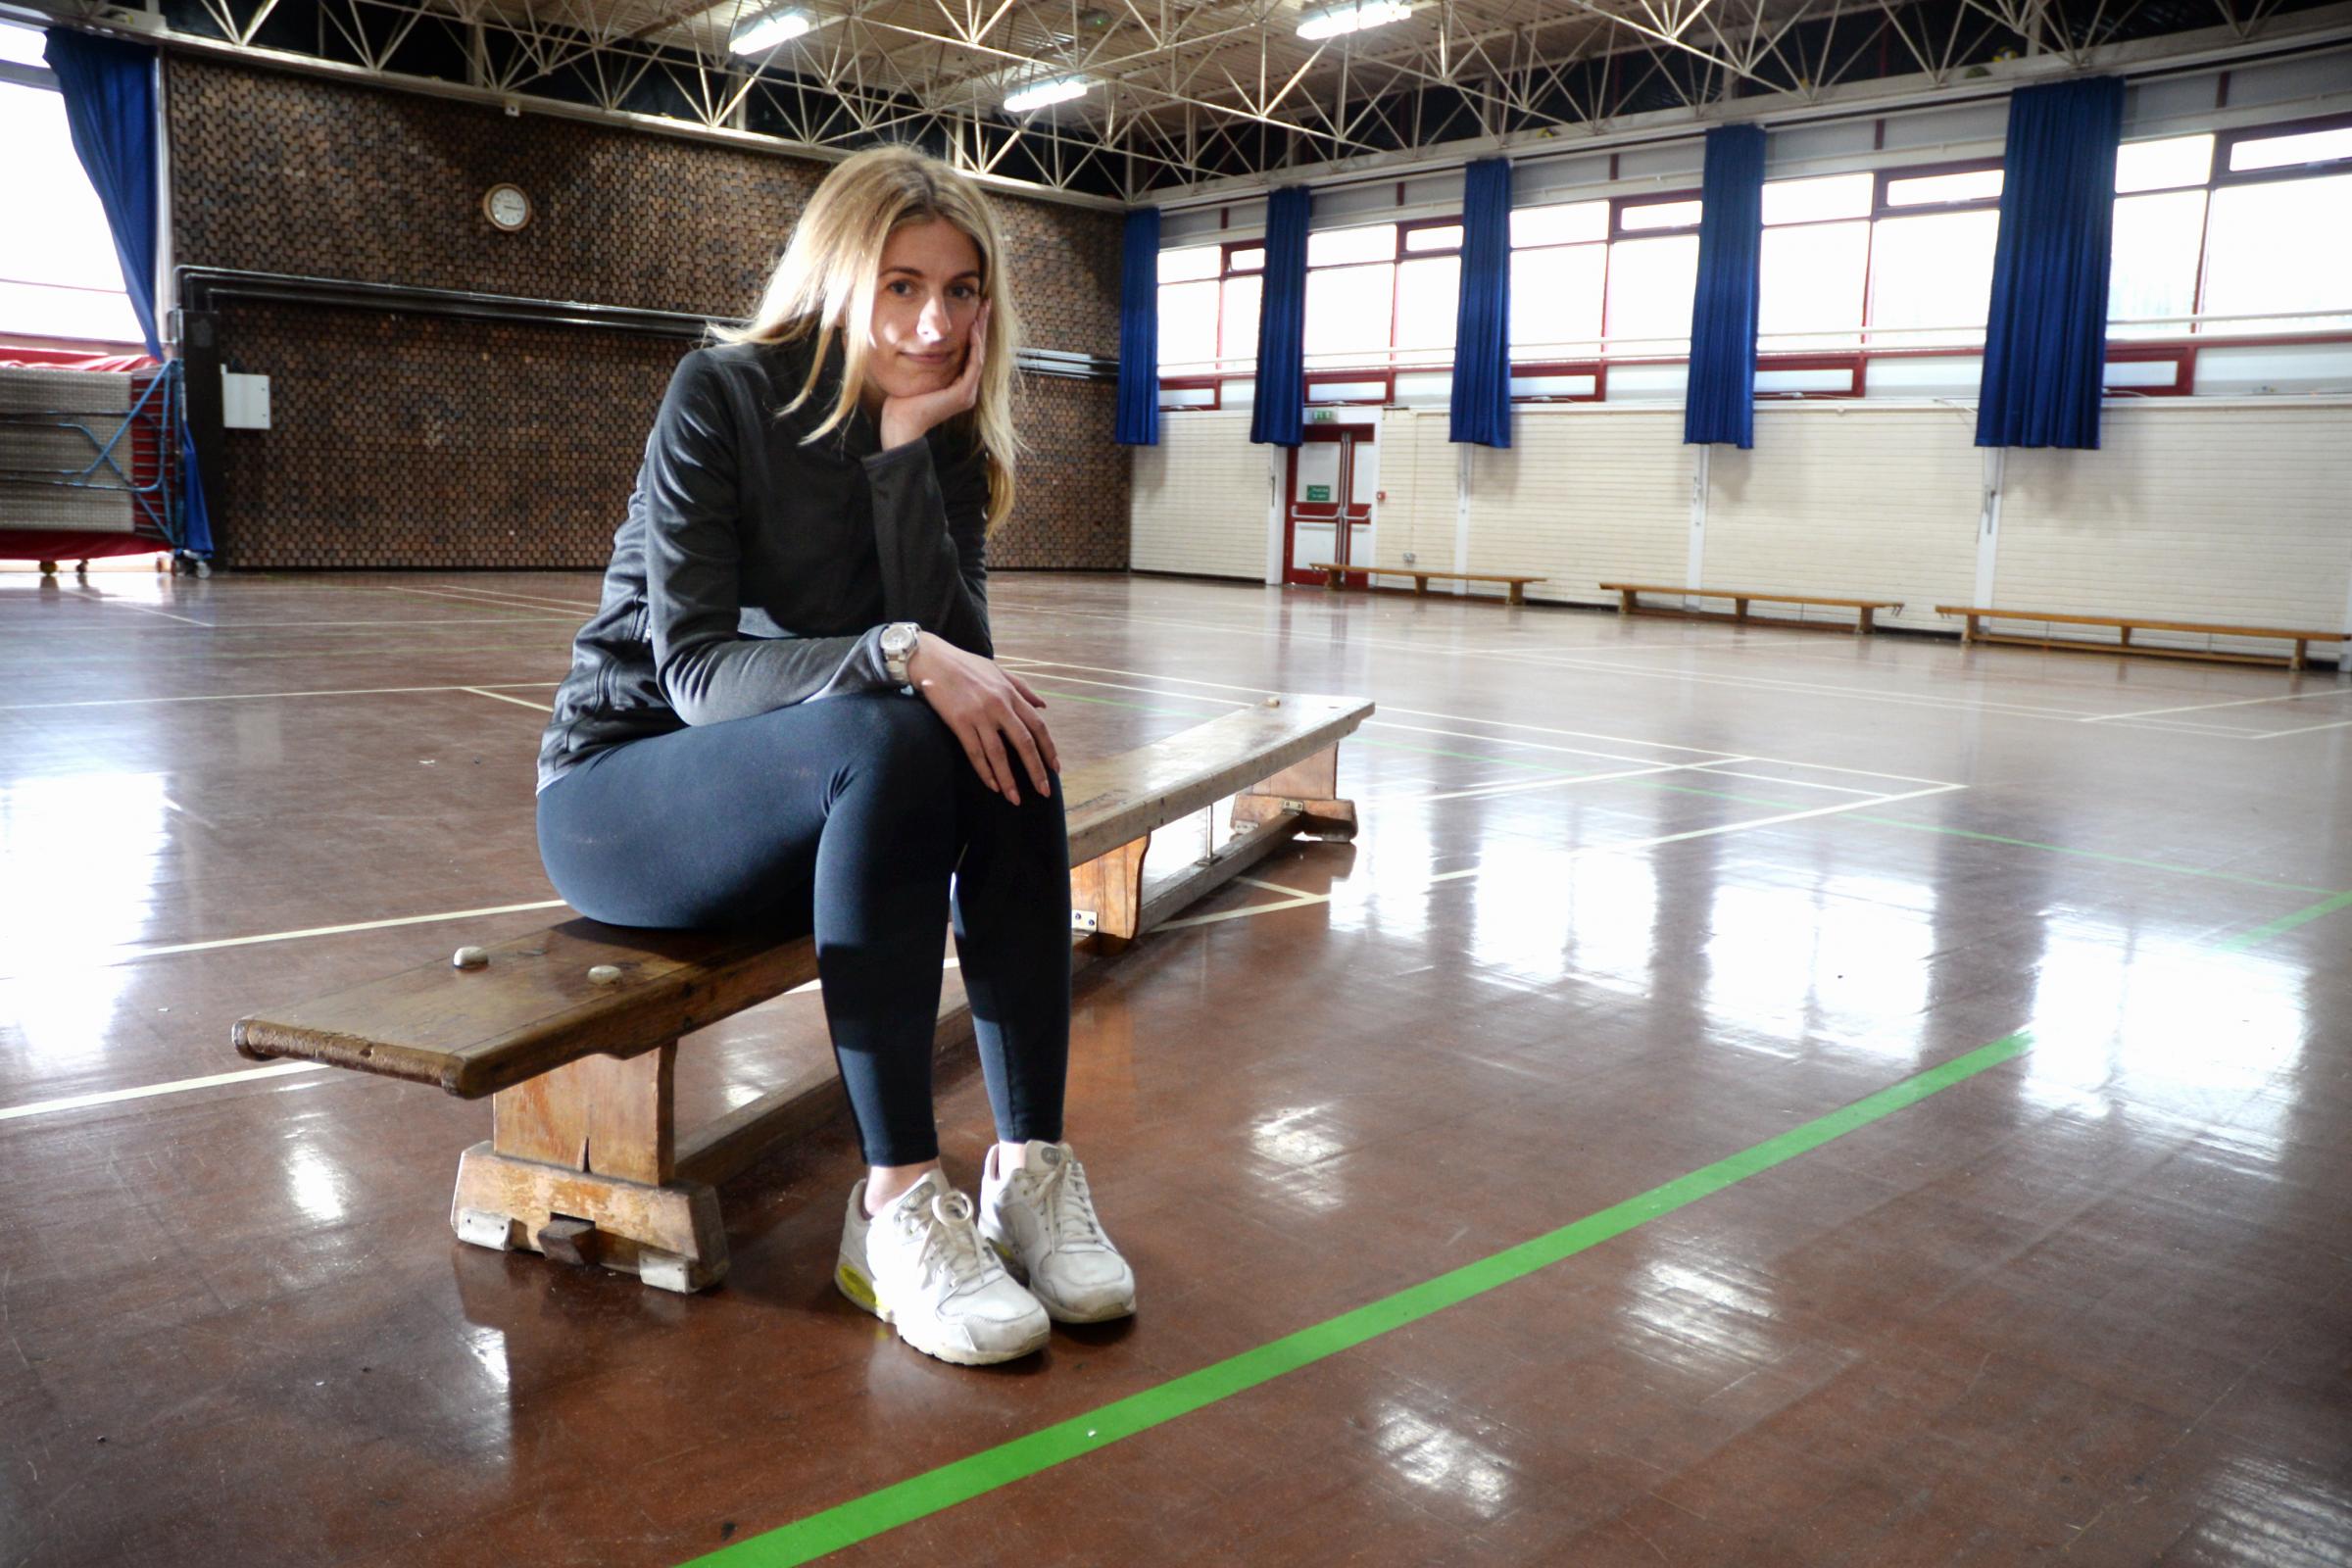 Accrington school headteacher highlights lack of sports facilities